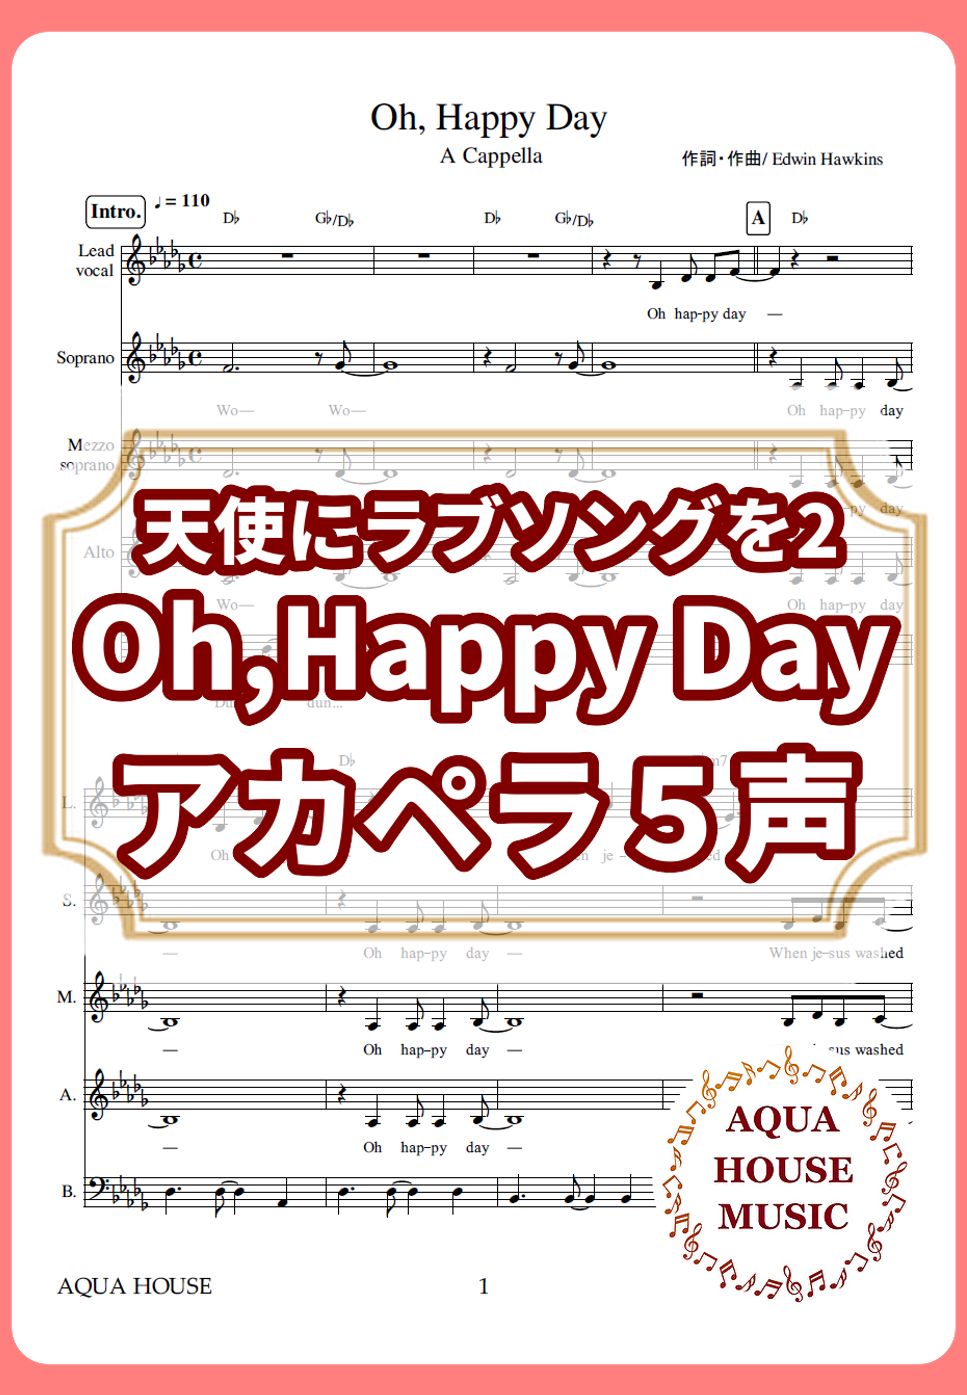 Oh Happy Day/天使にラブソングを2 (アカペラ楽譜♪５声ボイパなし) by 飯田 亜紗子